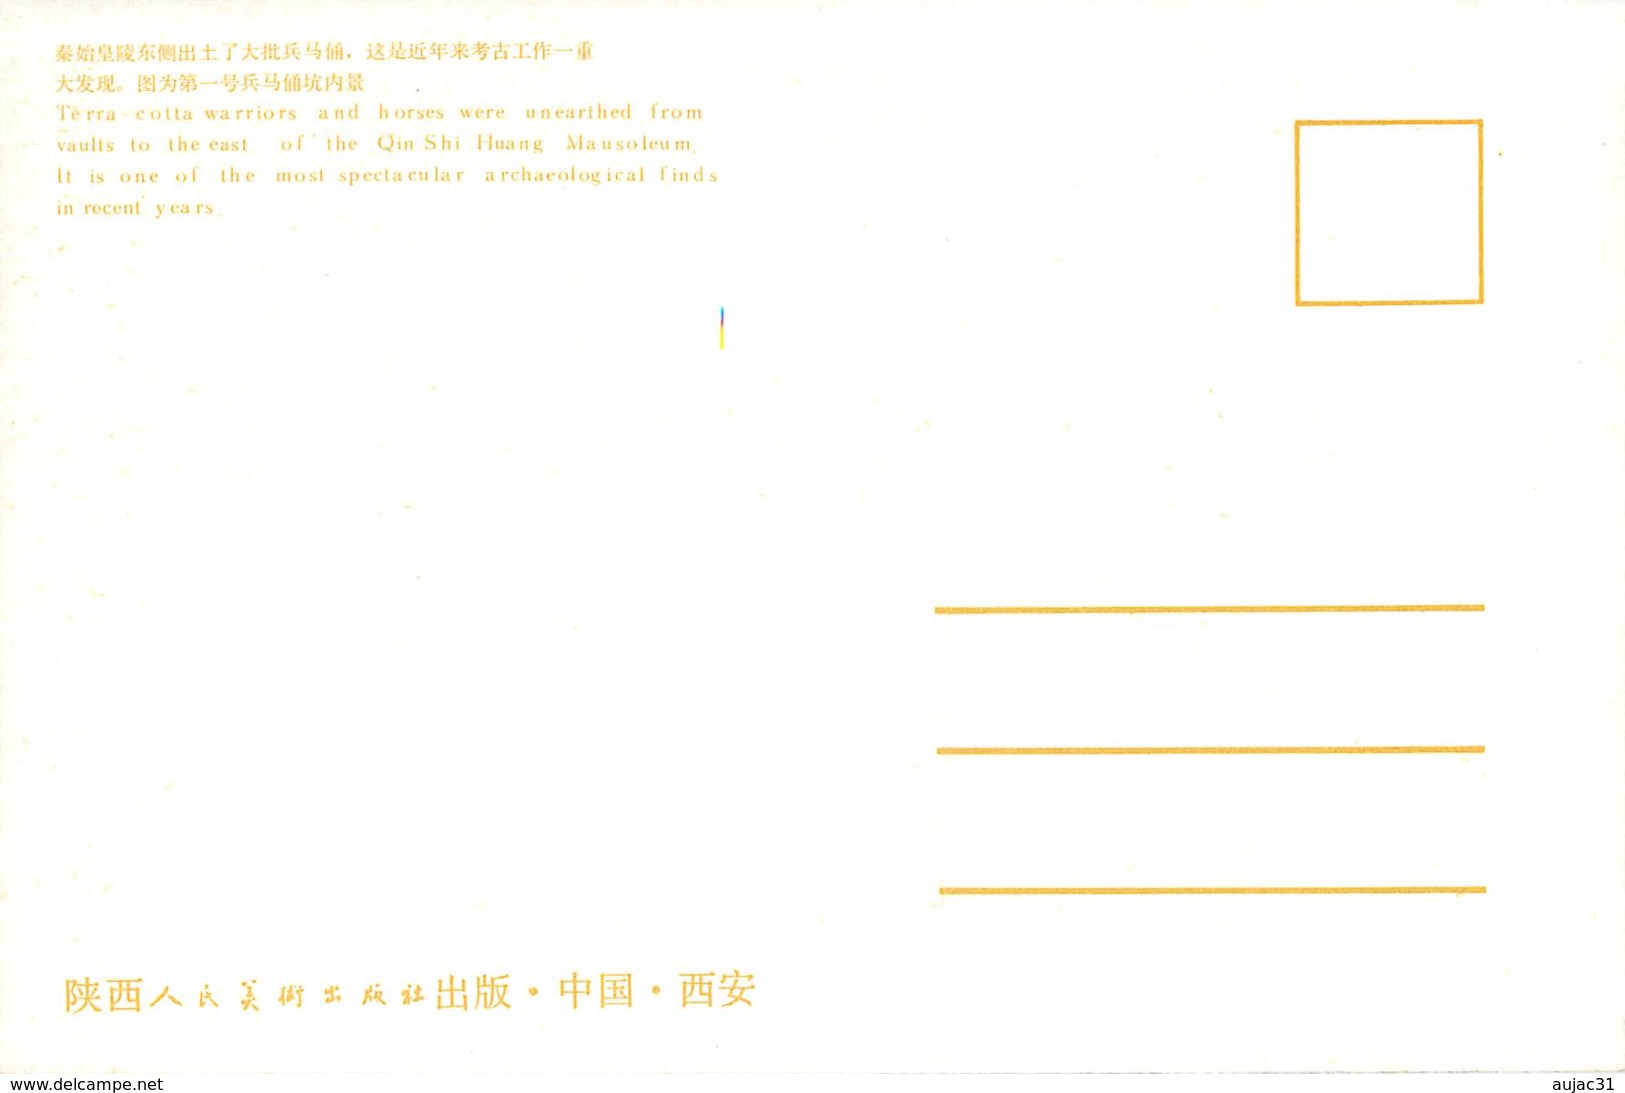 Chine - China - Xian - Xi'an - 8 cartes avec pochette - Semi moderne grand format - bon état